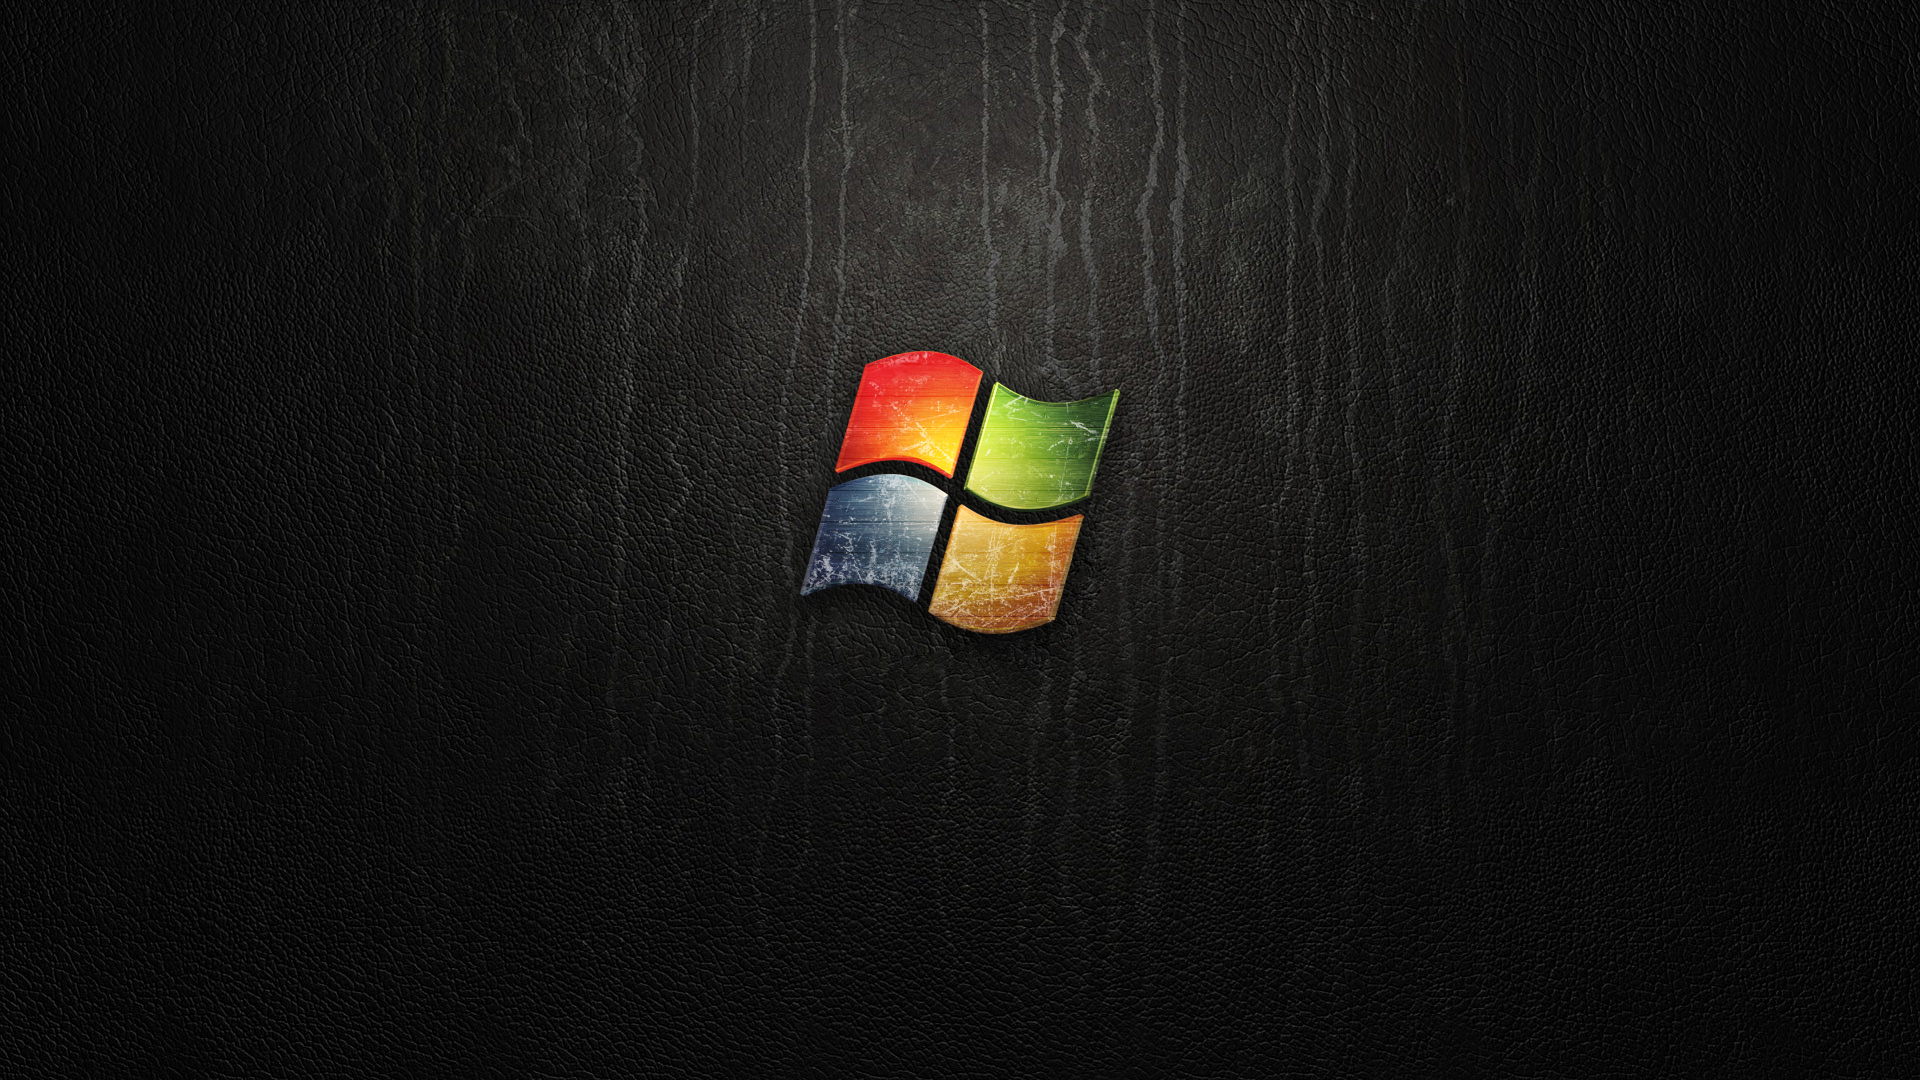 Microsoft Desktop Backgrounds on Leather Abstract Black Windows 7 Microsoft Logos Hd Wallpaper